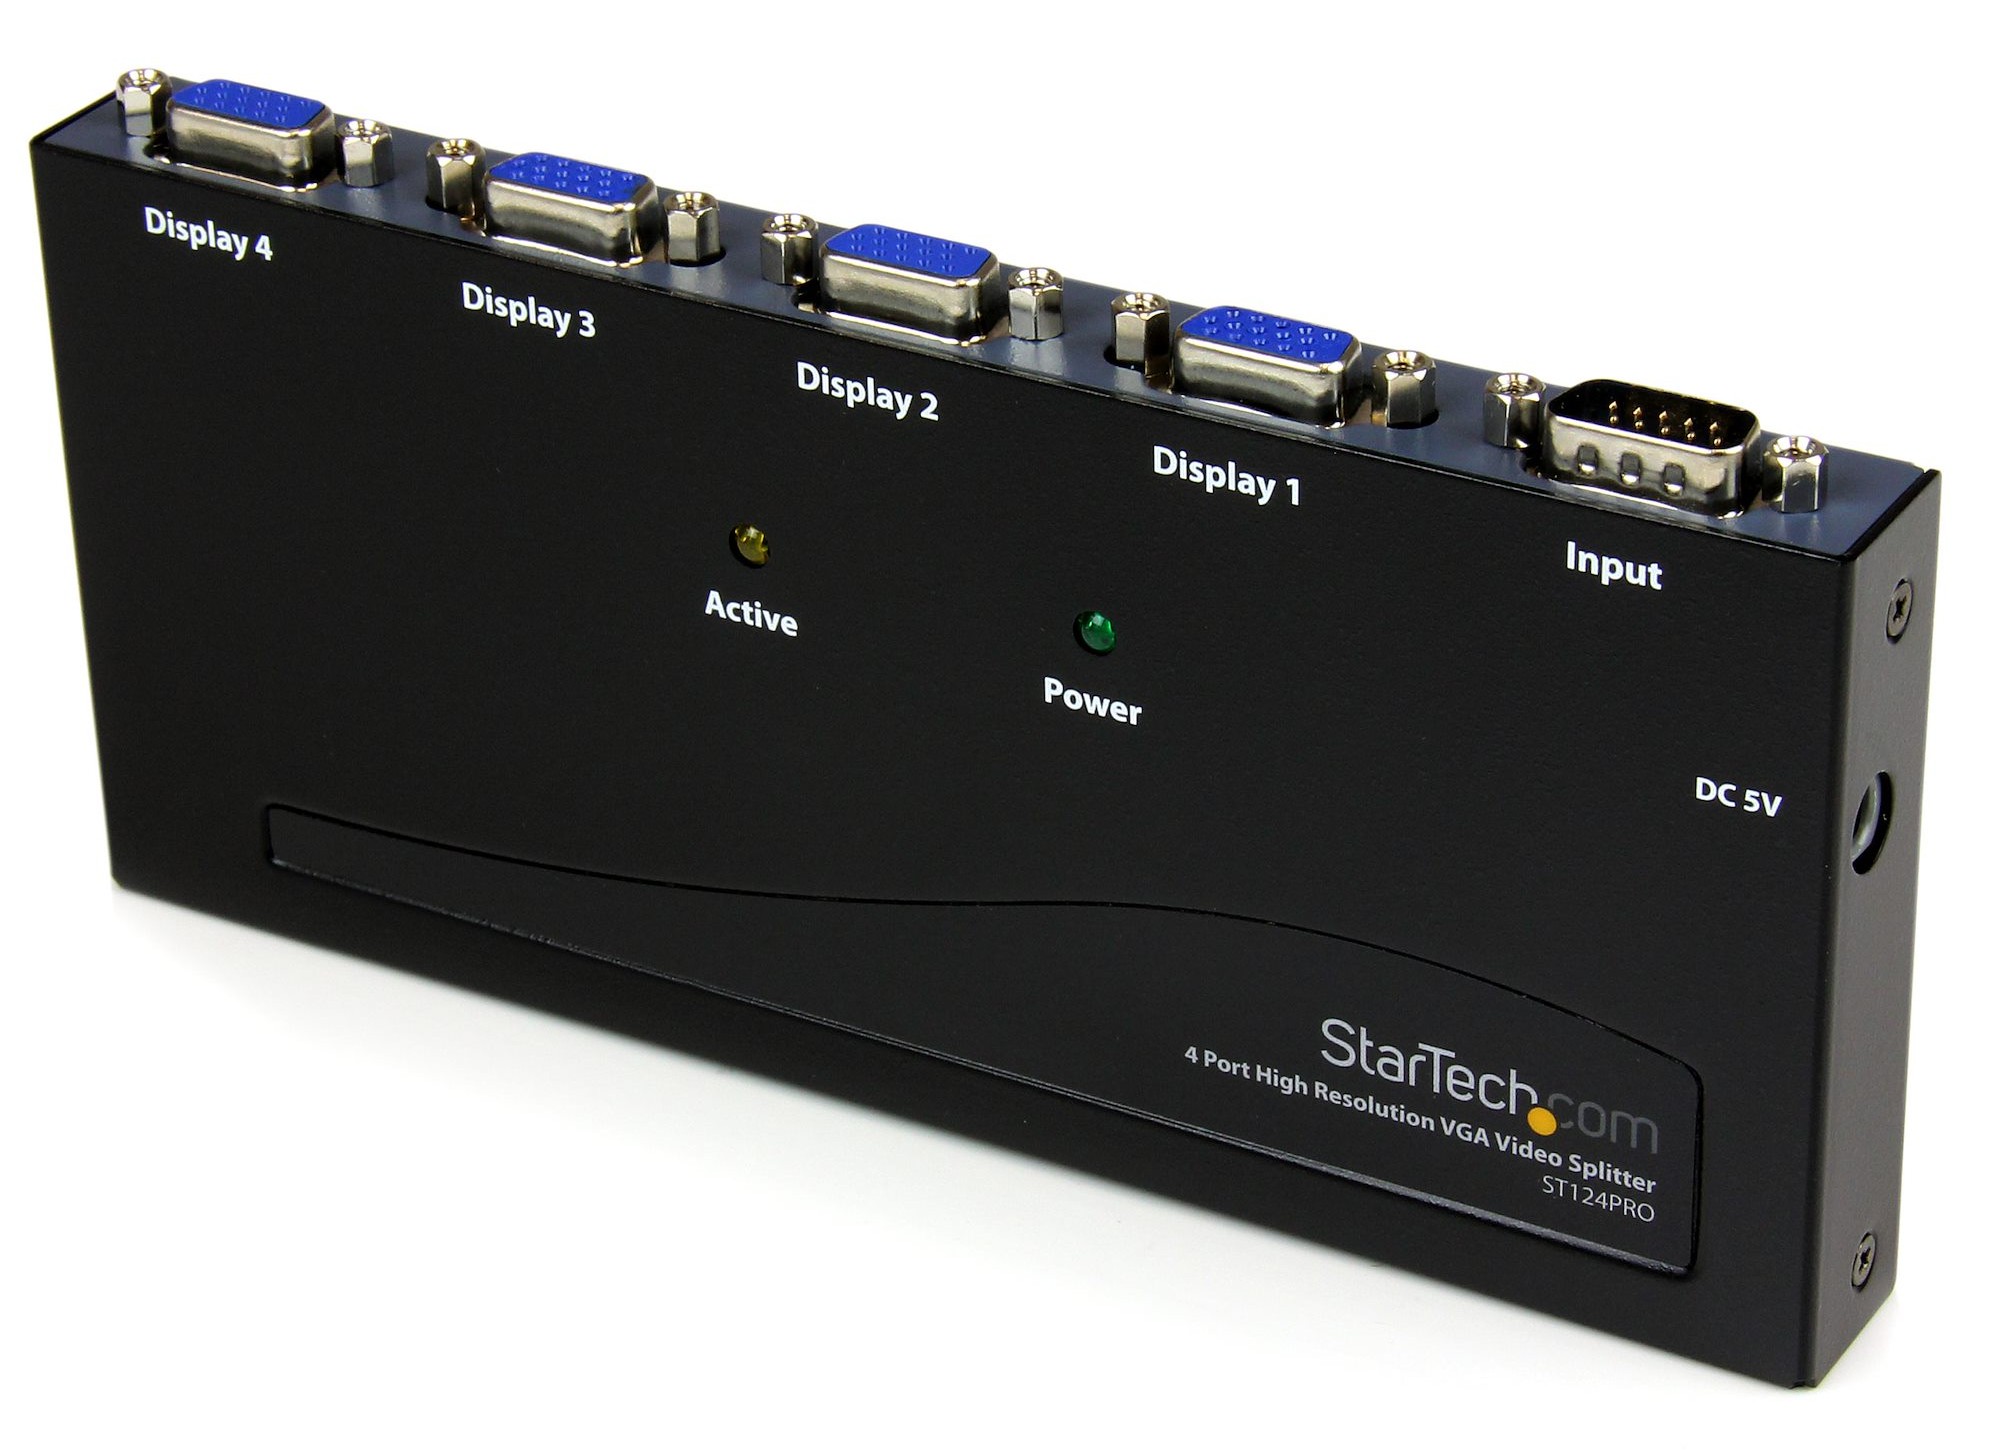 ST124PRO Port High-Resolution 350 MHz VGA Video Splitter  Distribution Amplifier